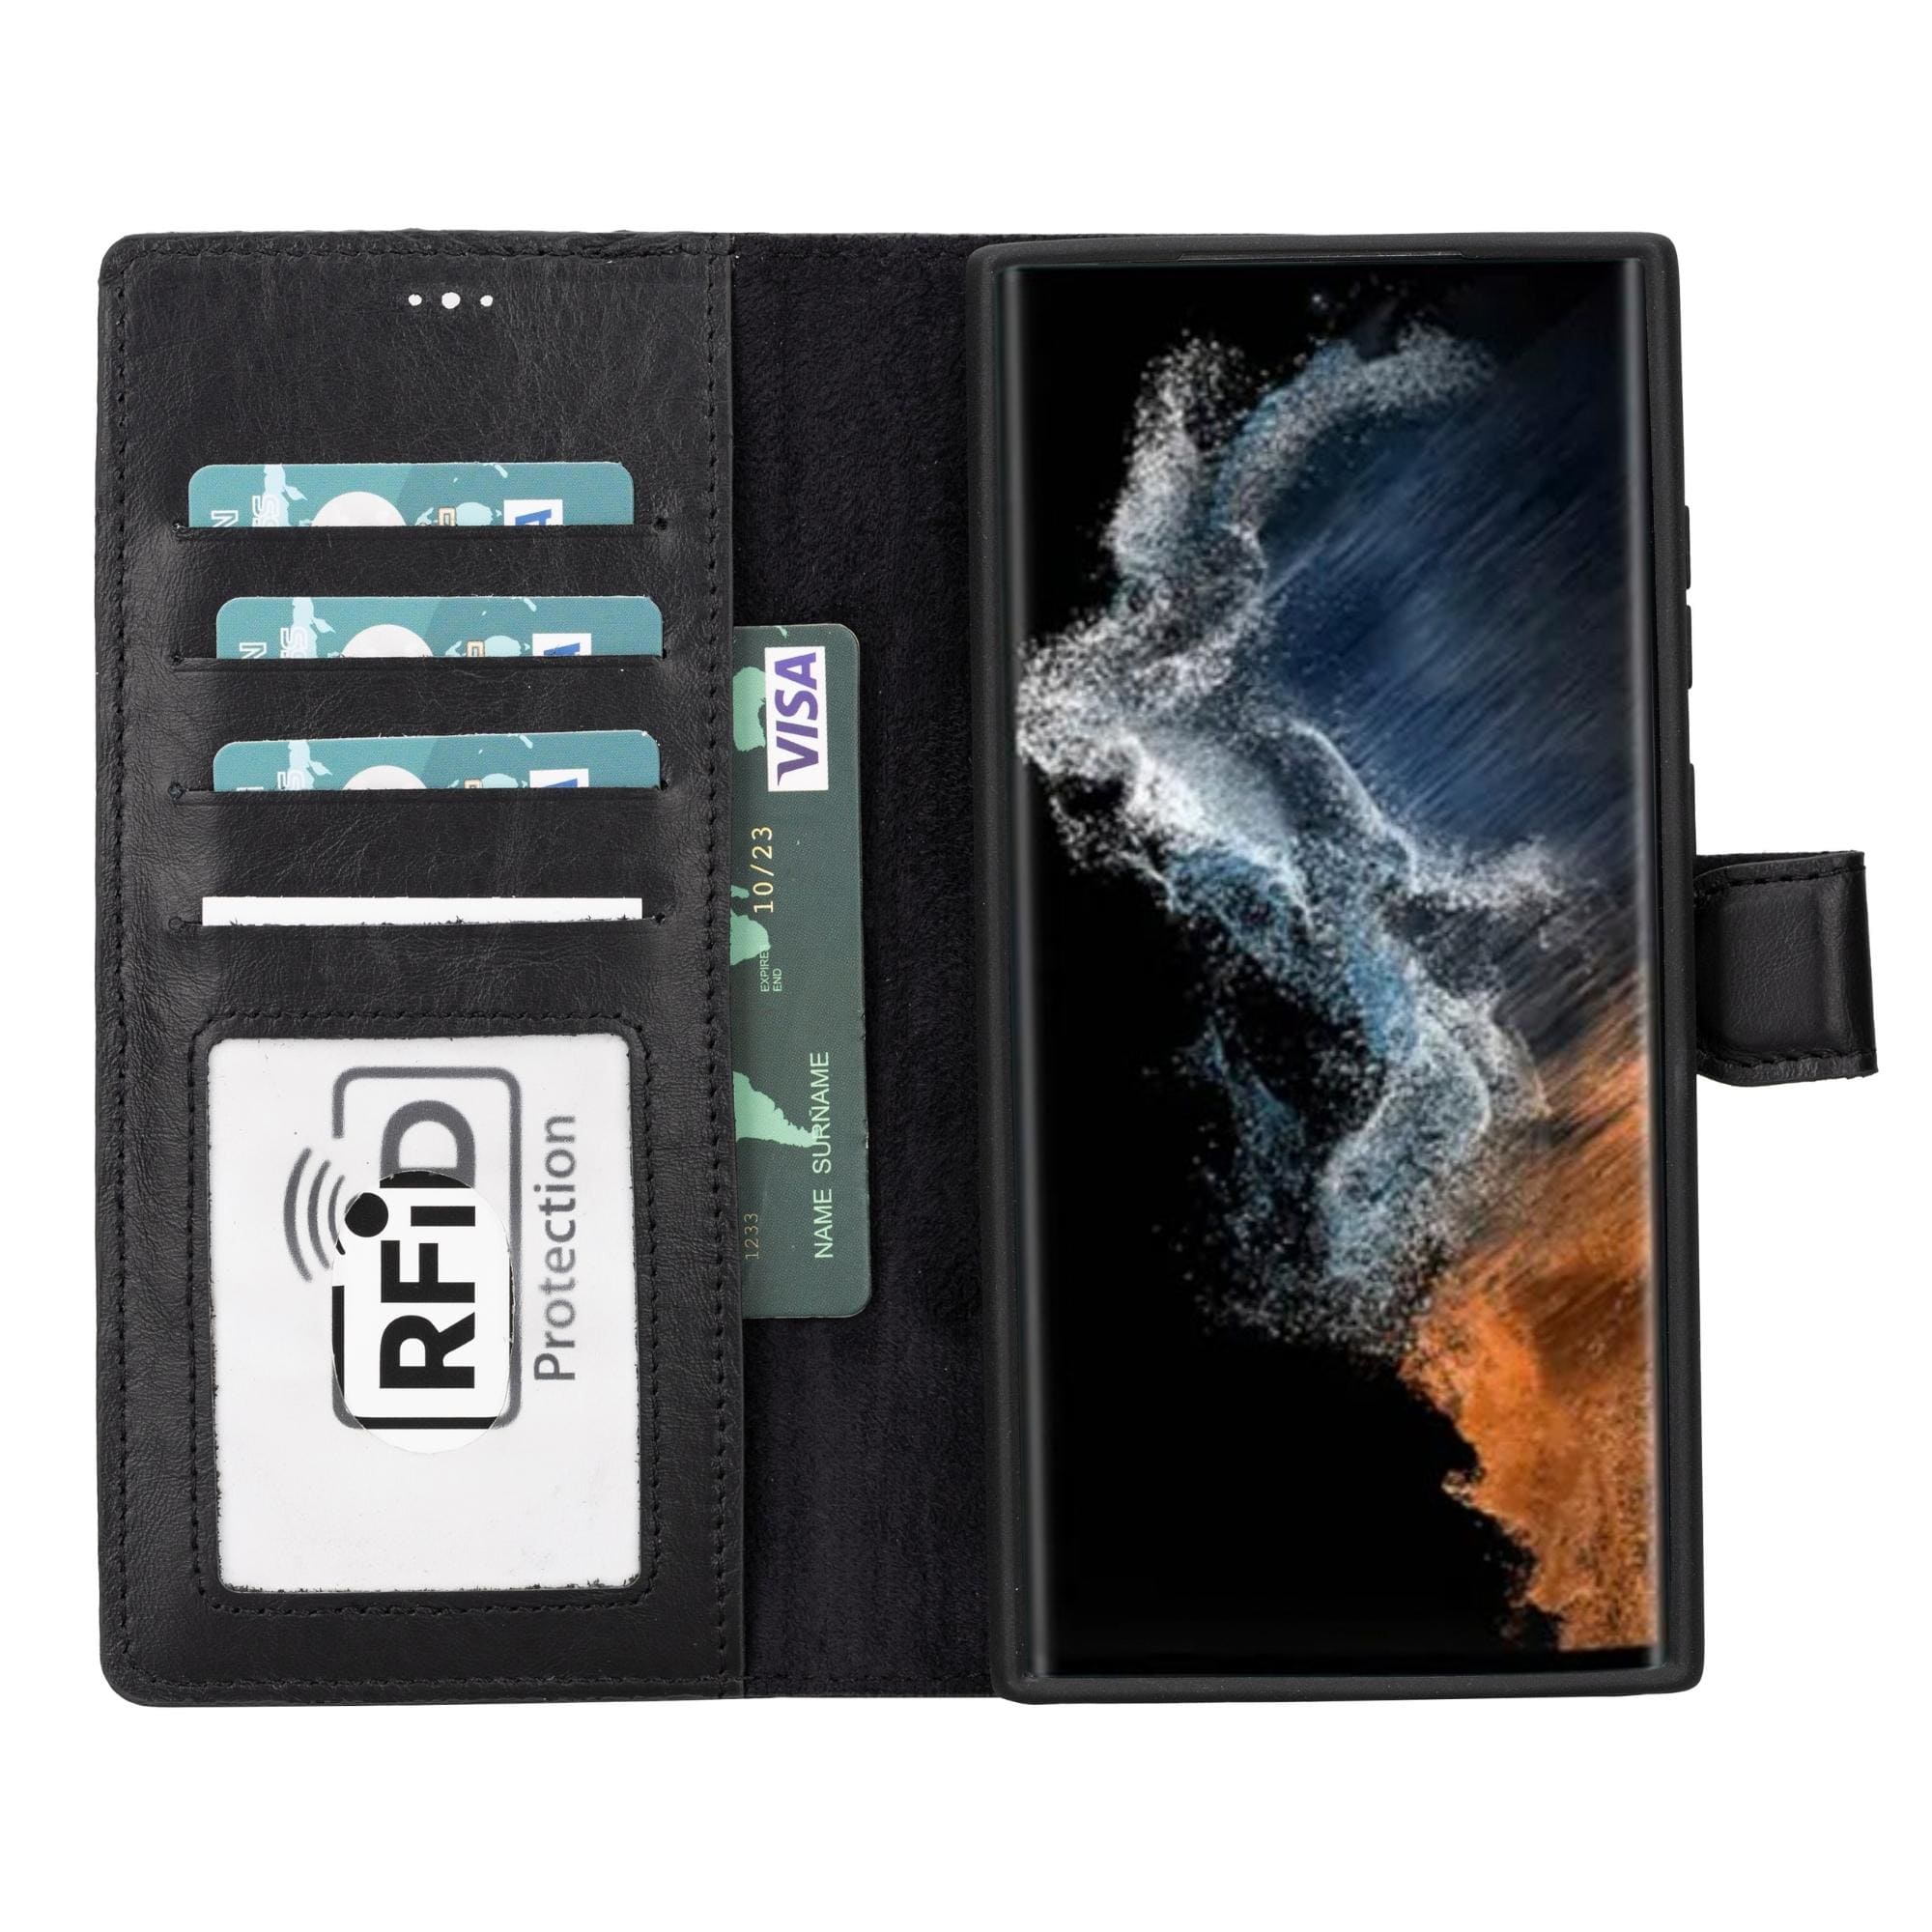 Buffalo Samsung Galaxy S21 Series Detachable Leather Wallet Case - Galaxy S21 Ultra - Black - TORONATA